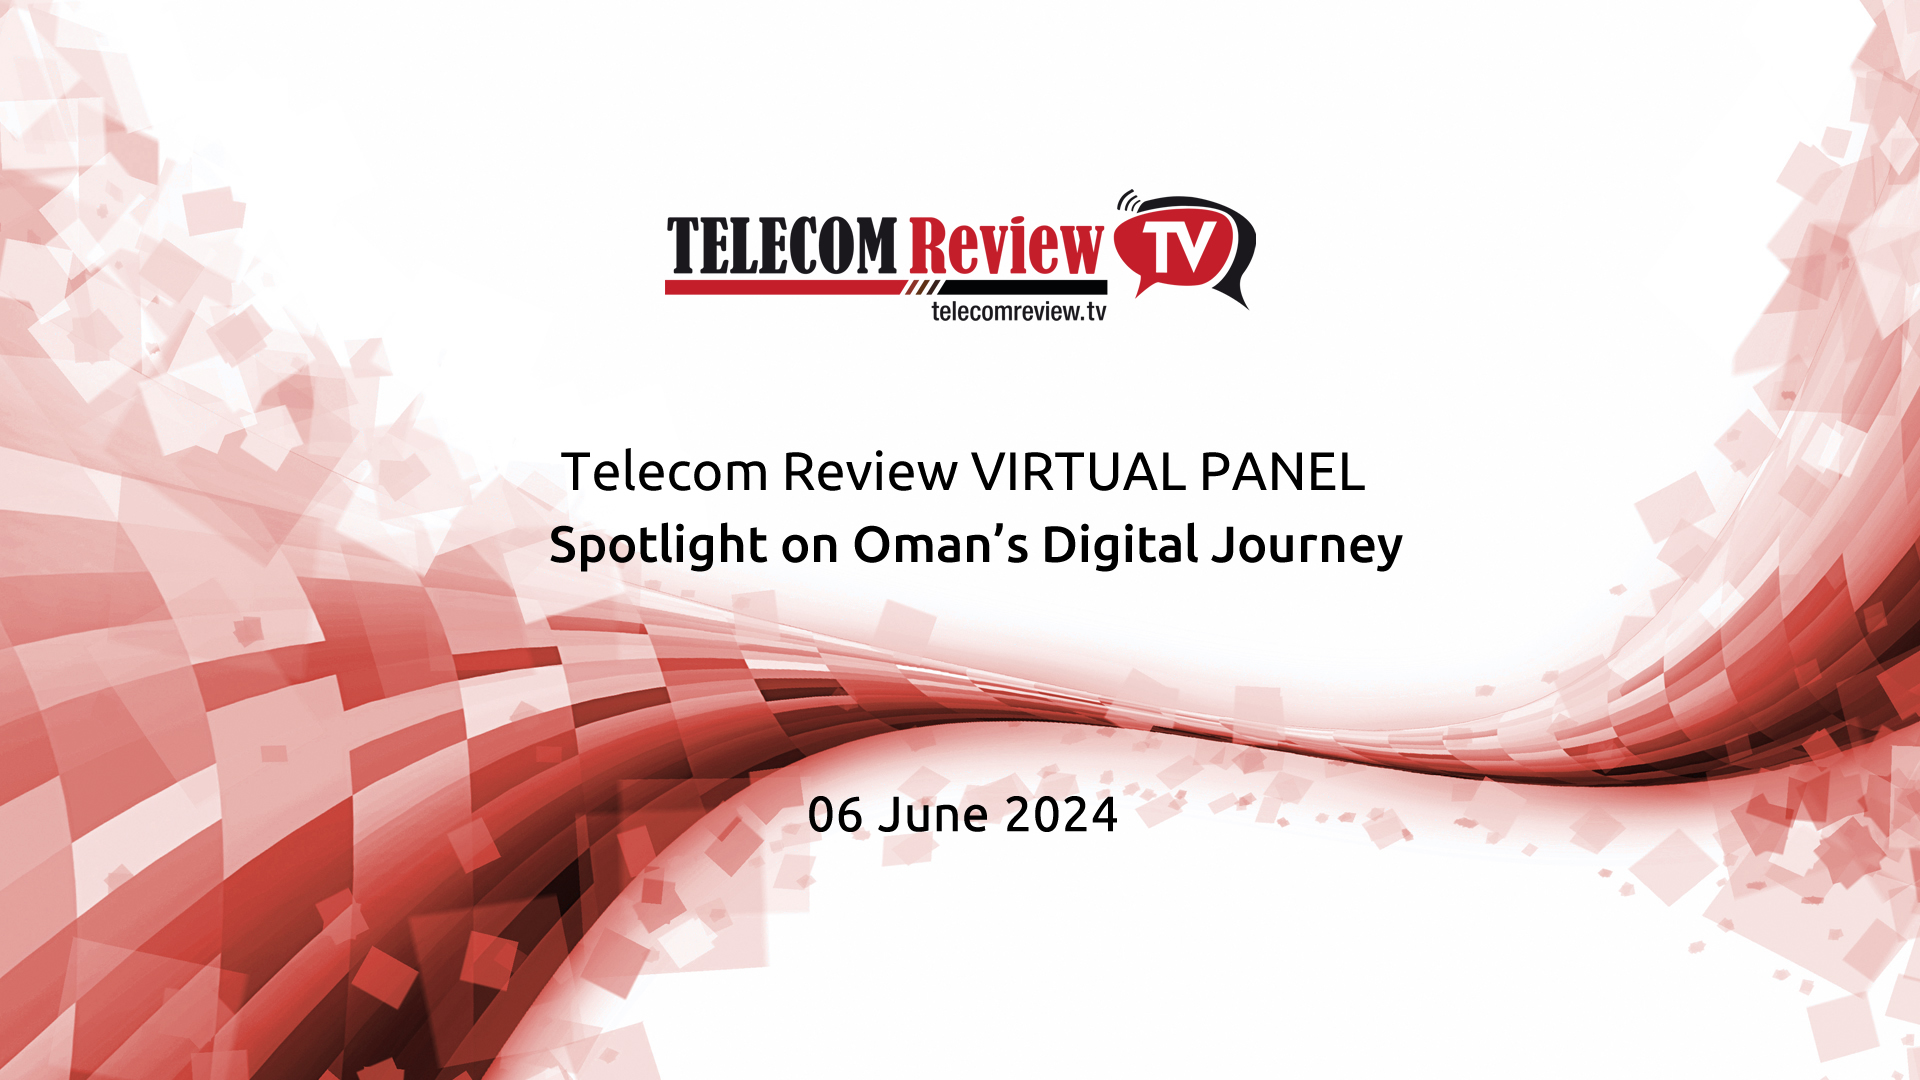 Oman’s Digital Journey